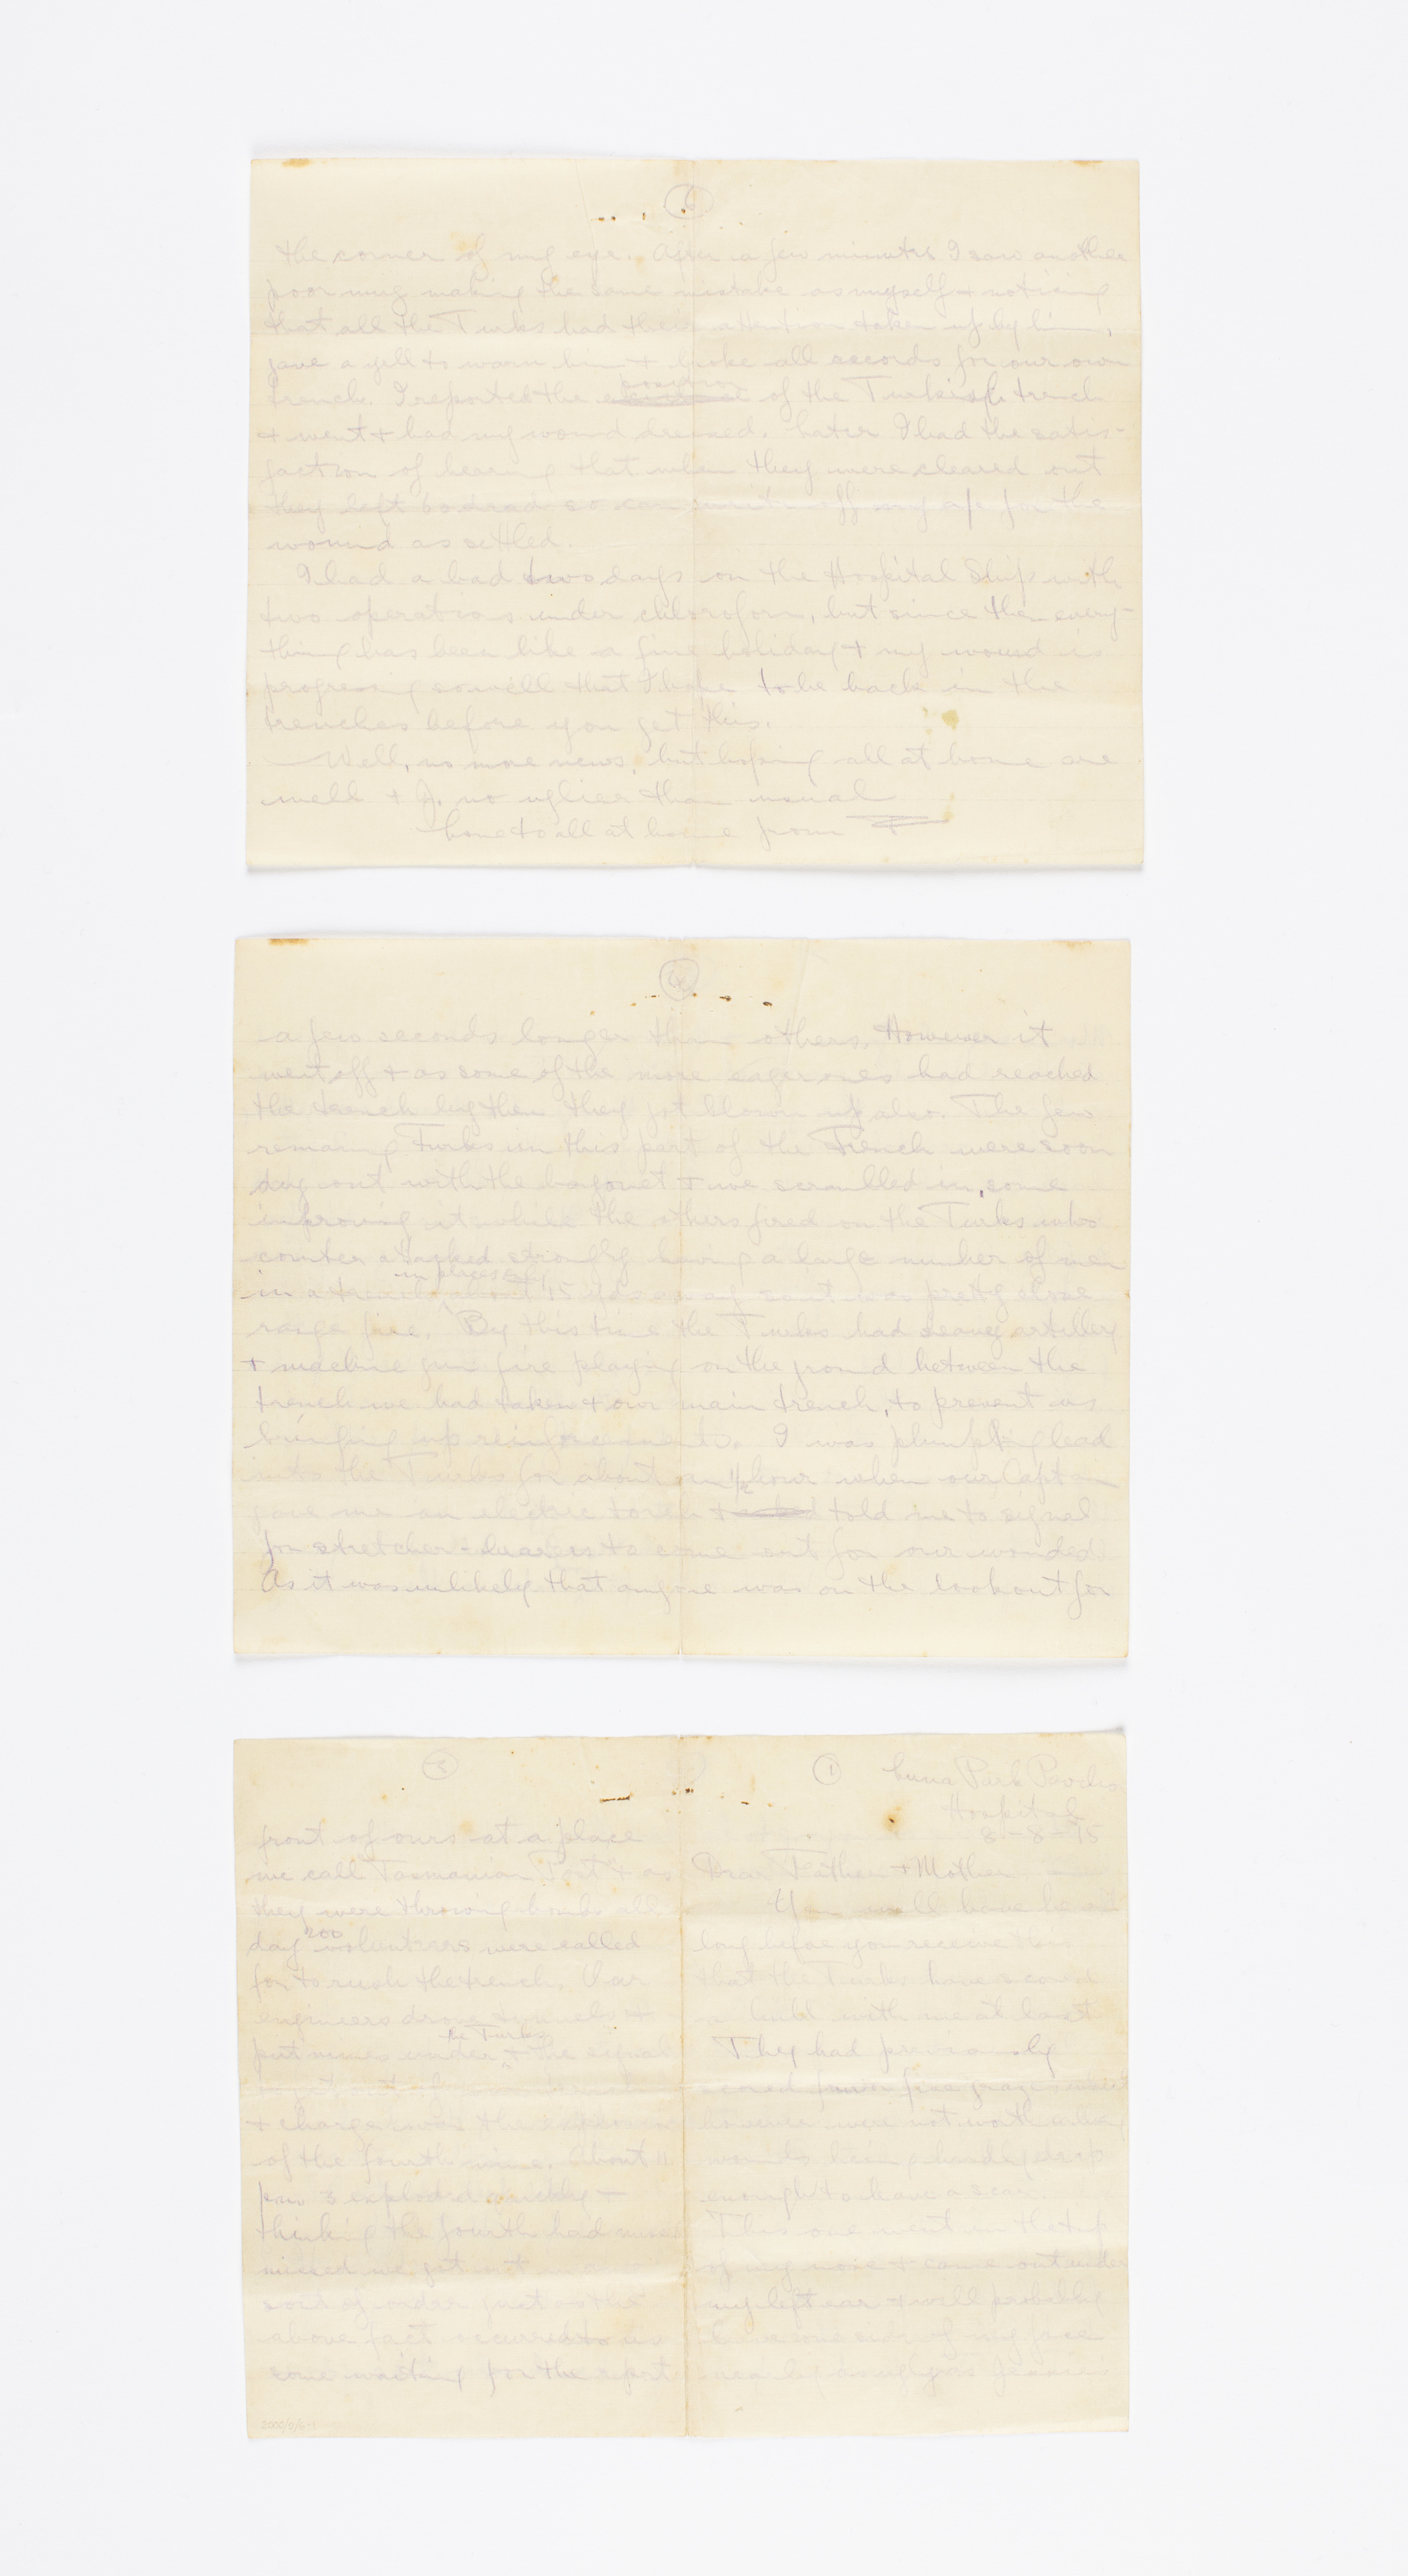 Letter from Boddington family World War I archive